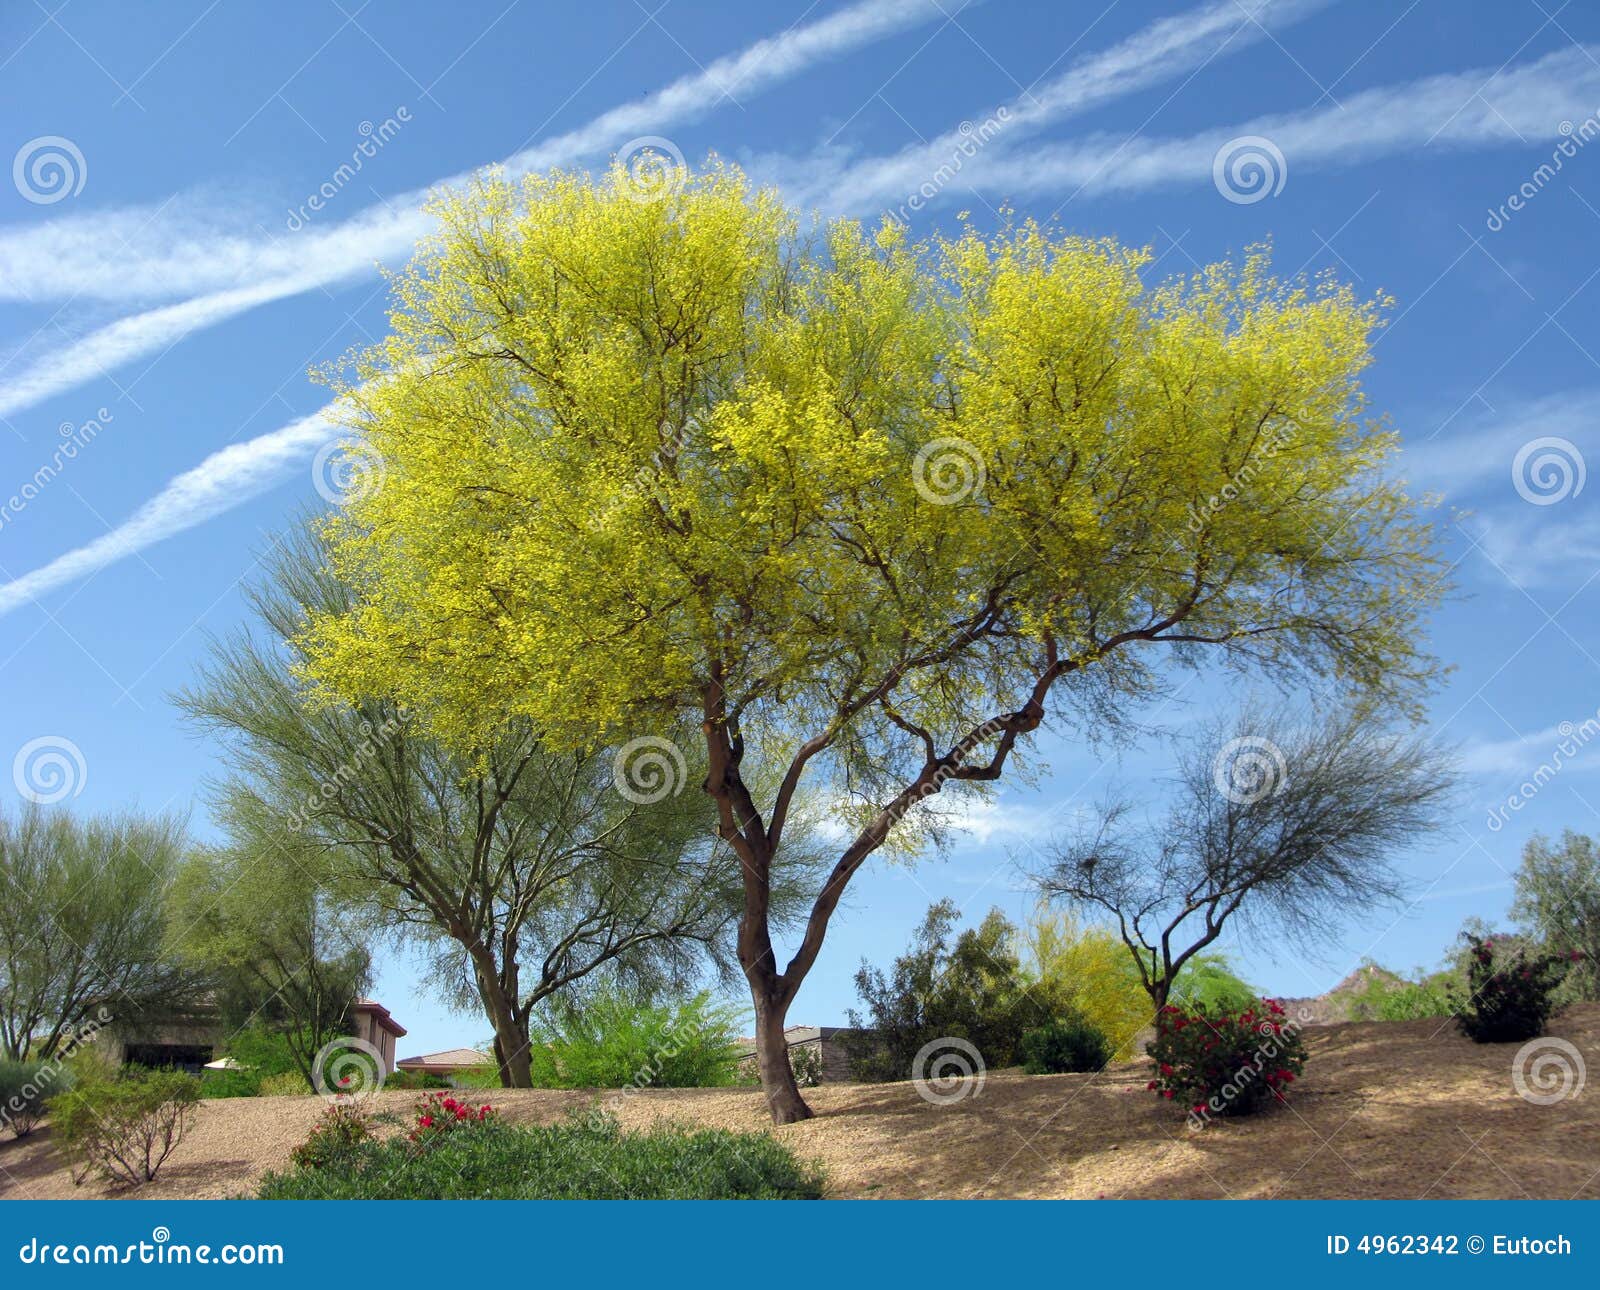 arizona palo verde tree